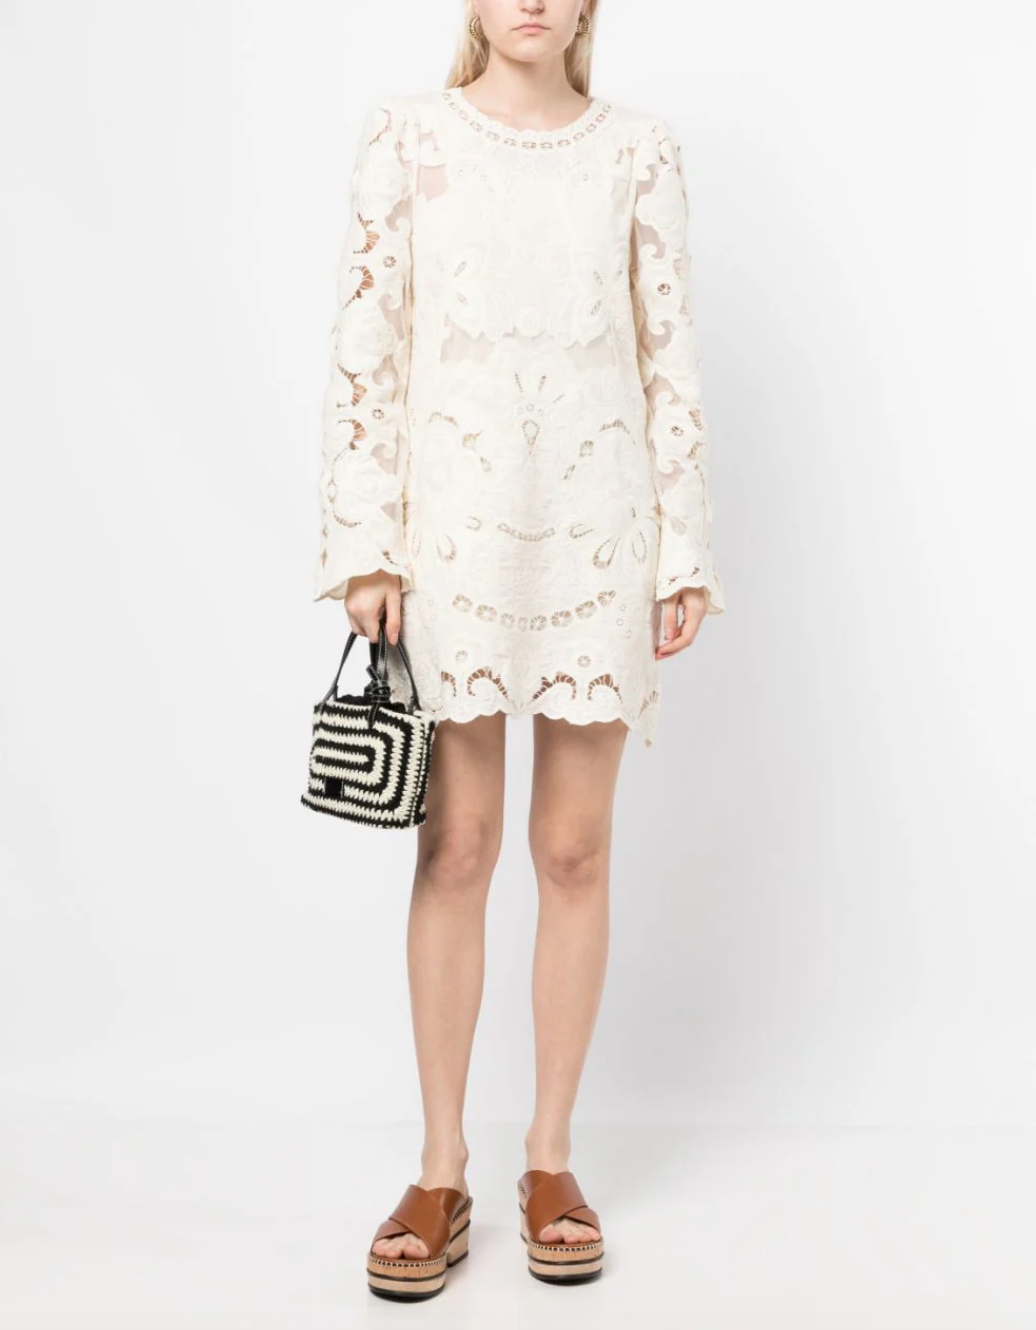 Erin Lichy's White Lace Dress